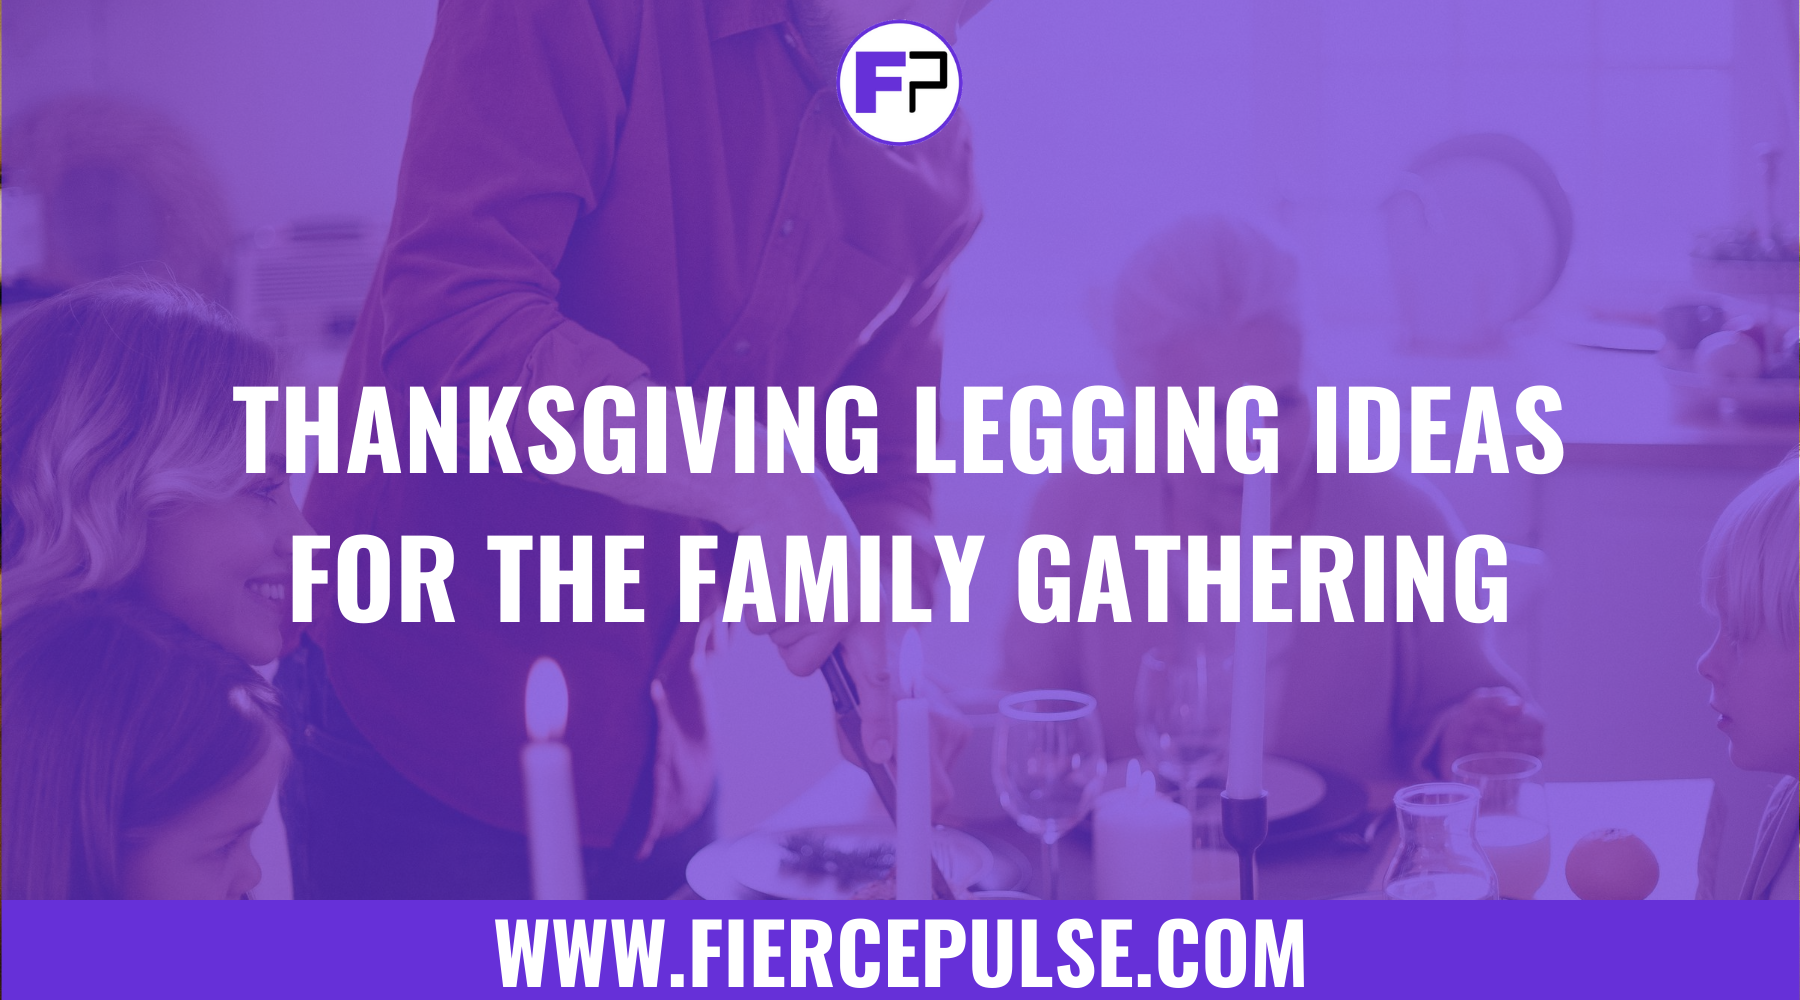 Thanksgiving Legging Ideas for the Family Gathering